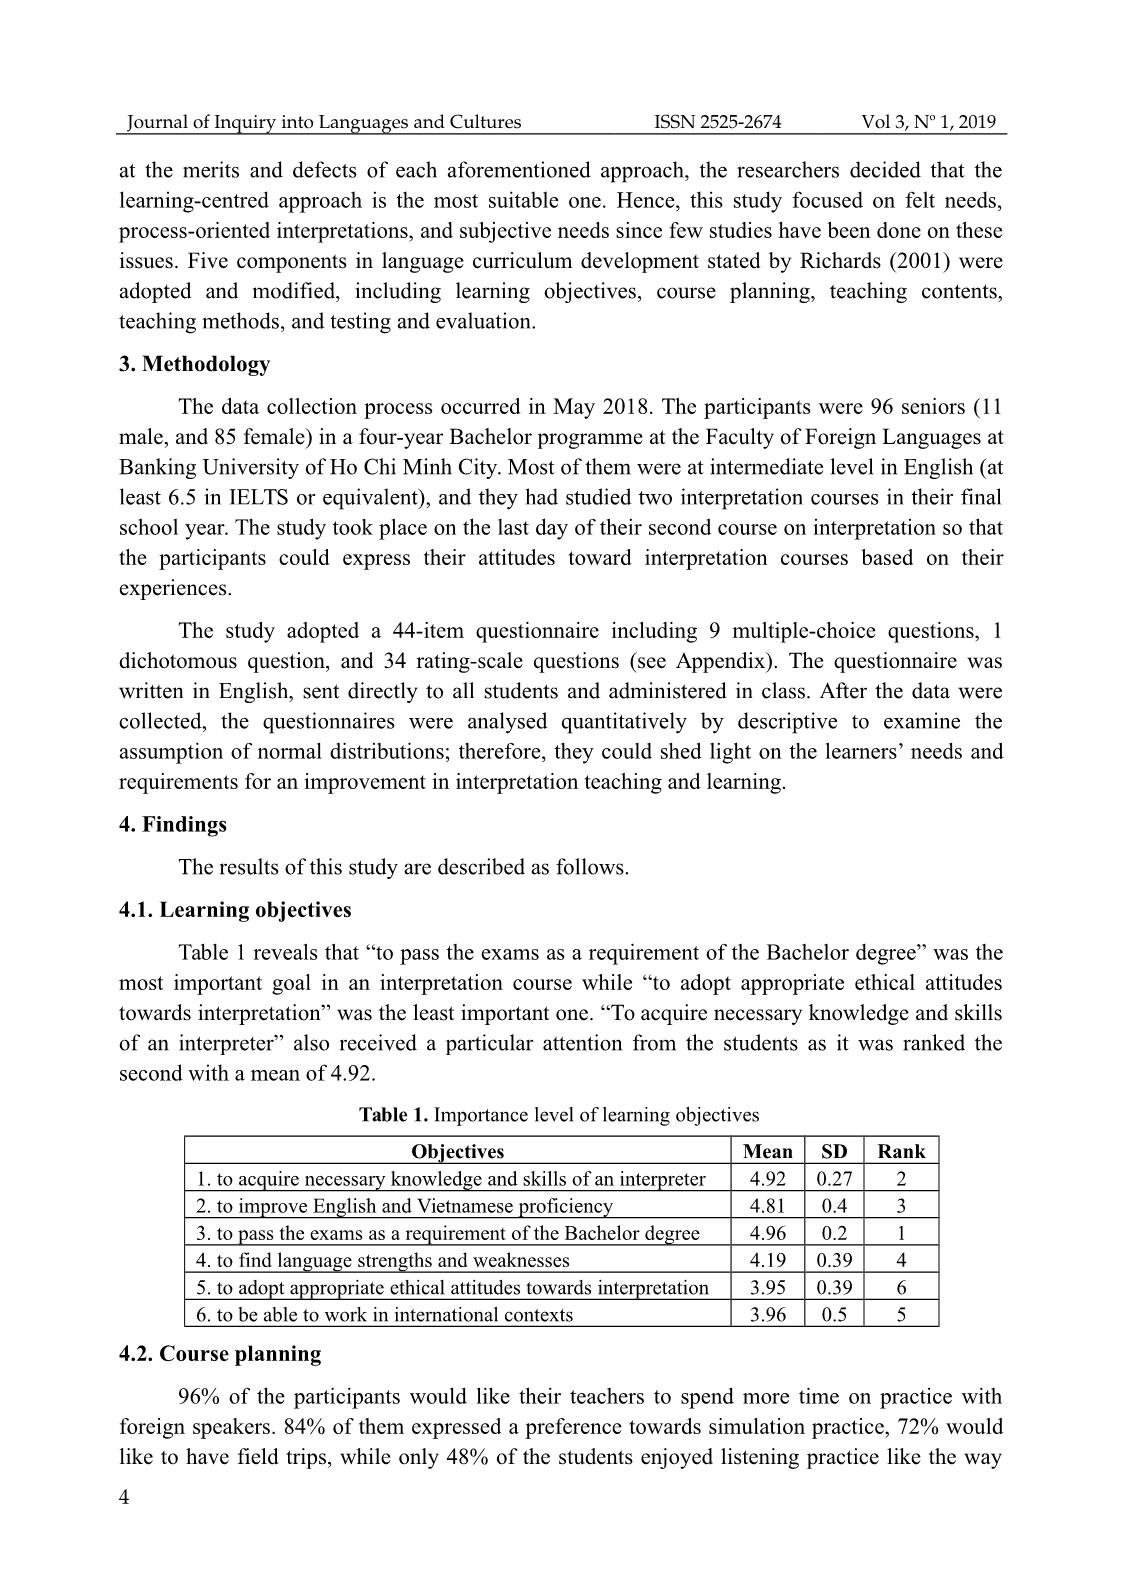 Analyzing undergraduates’ needs for an improvement in interpreter training curriculum at banking university HCMC, Vietnam trang 4